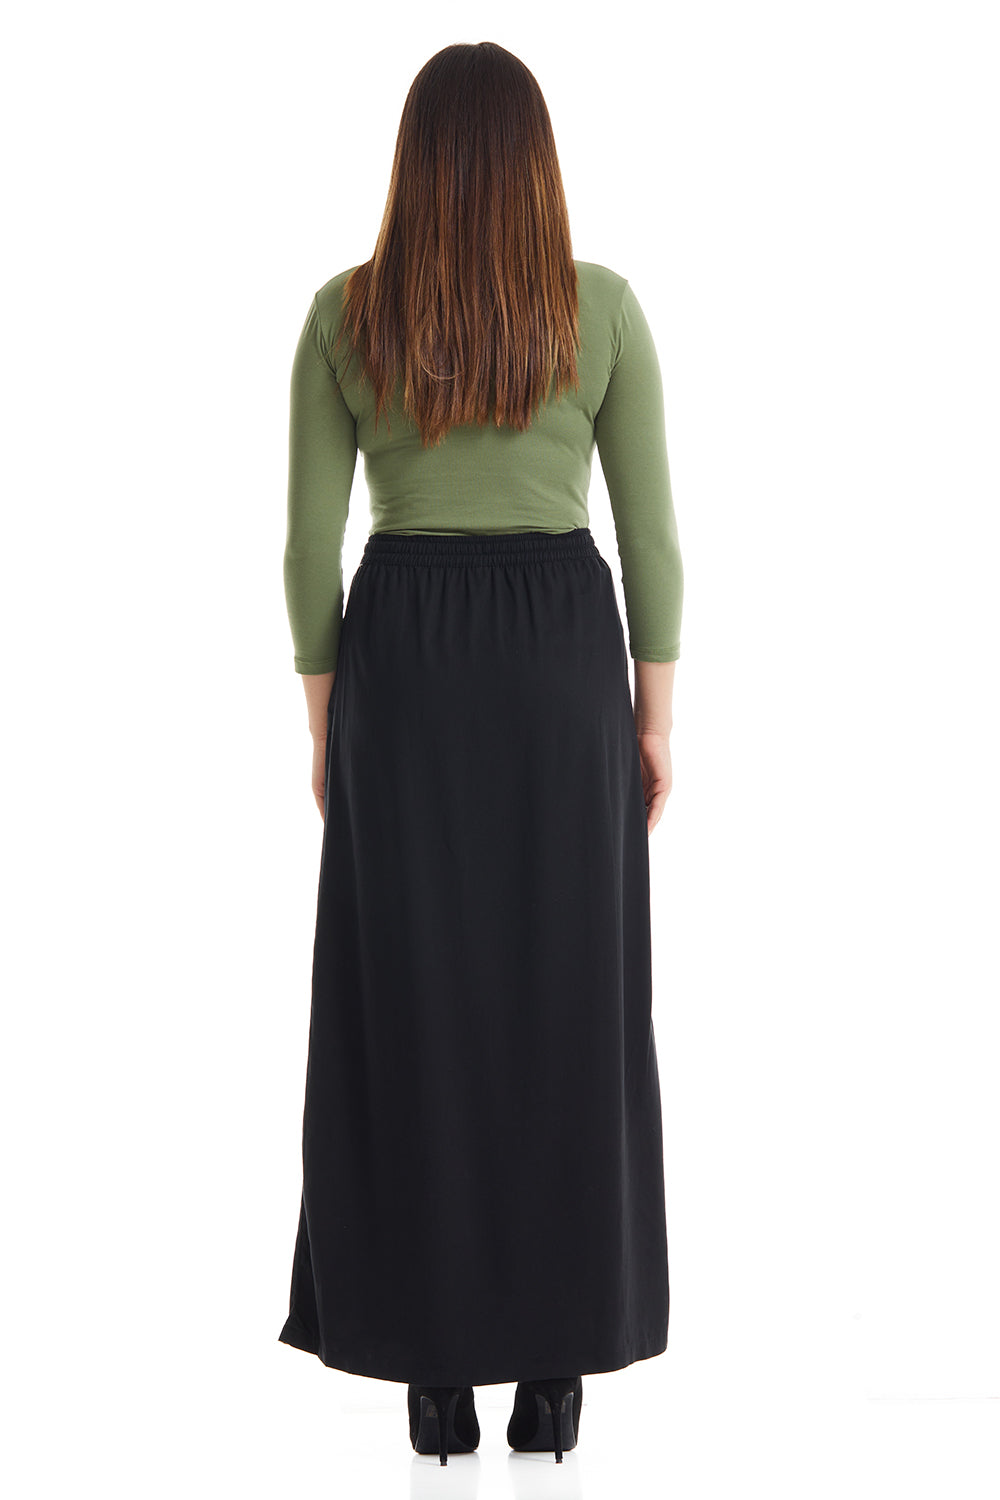 Esteez ATLANTA skirt - Modest Maxi Skirt for Women 100% Tencel